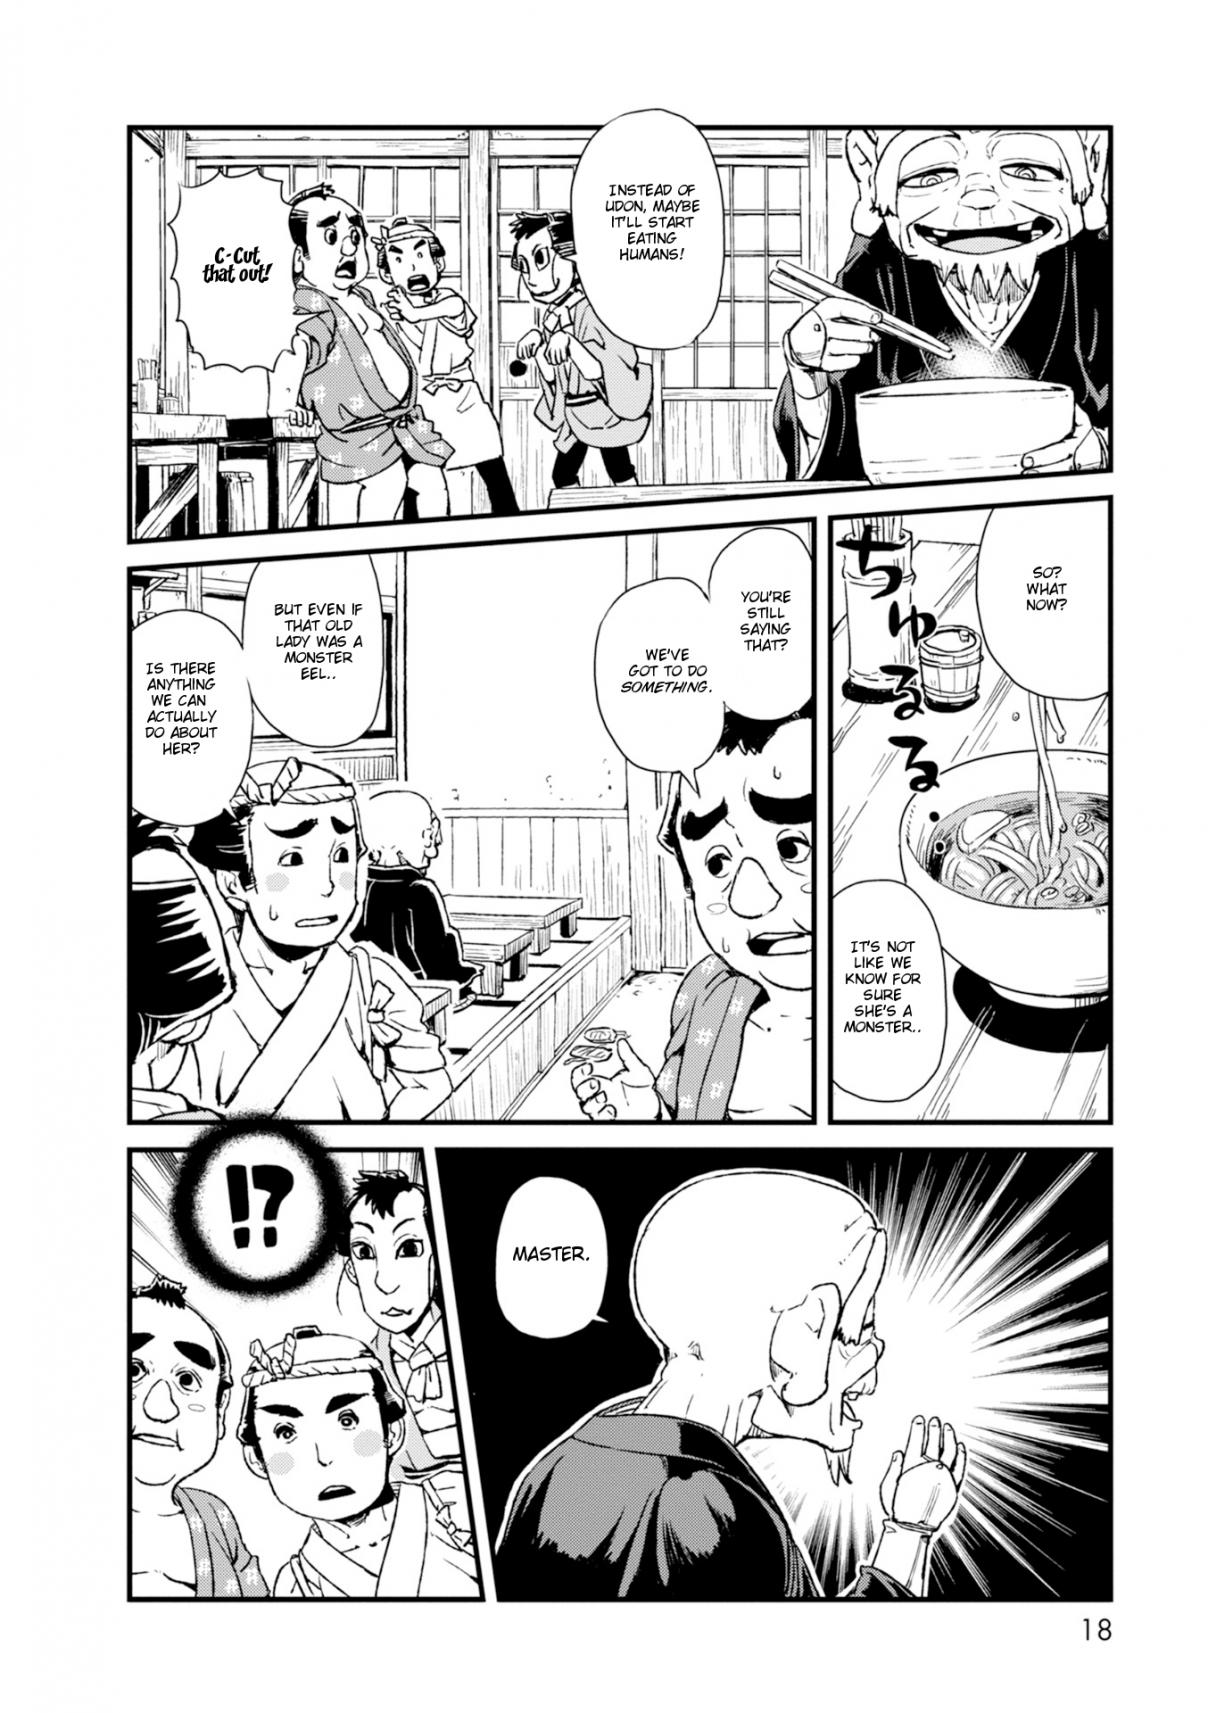 Neko Musume Michikusa Nikki Vol. 14 Ch. 80 Passing the Time Wanting to Eat Udon